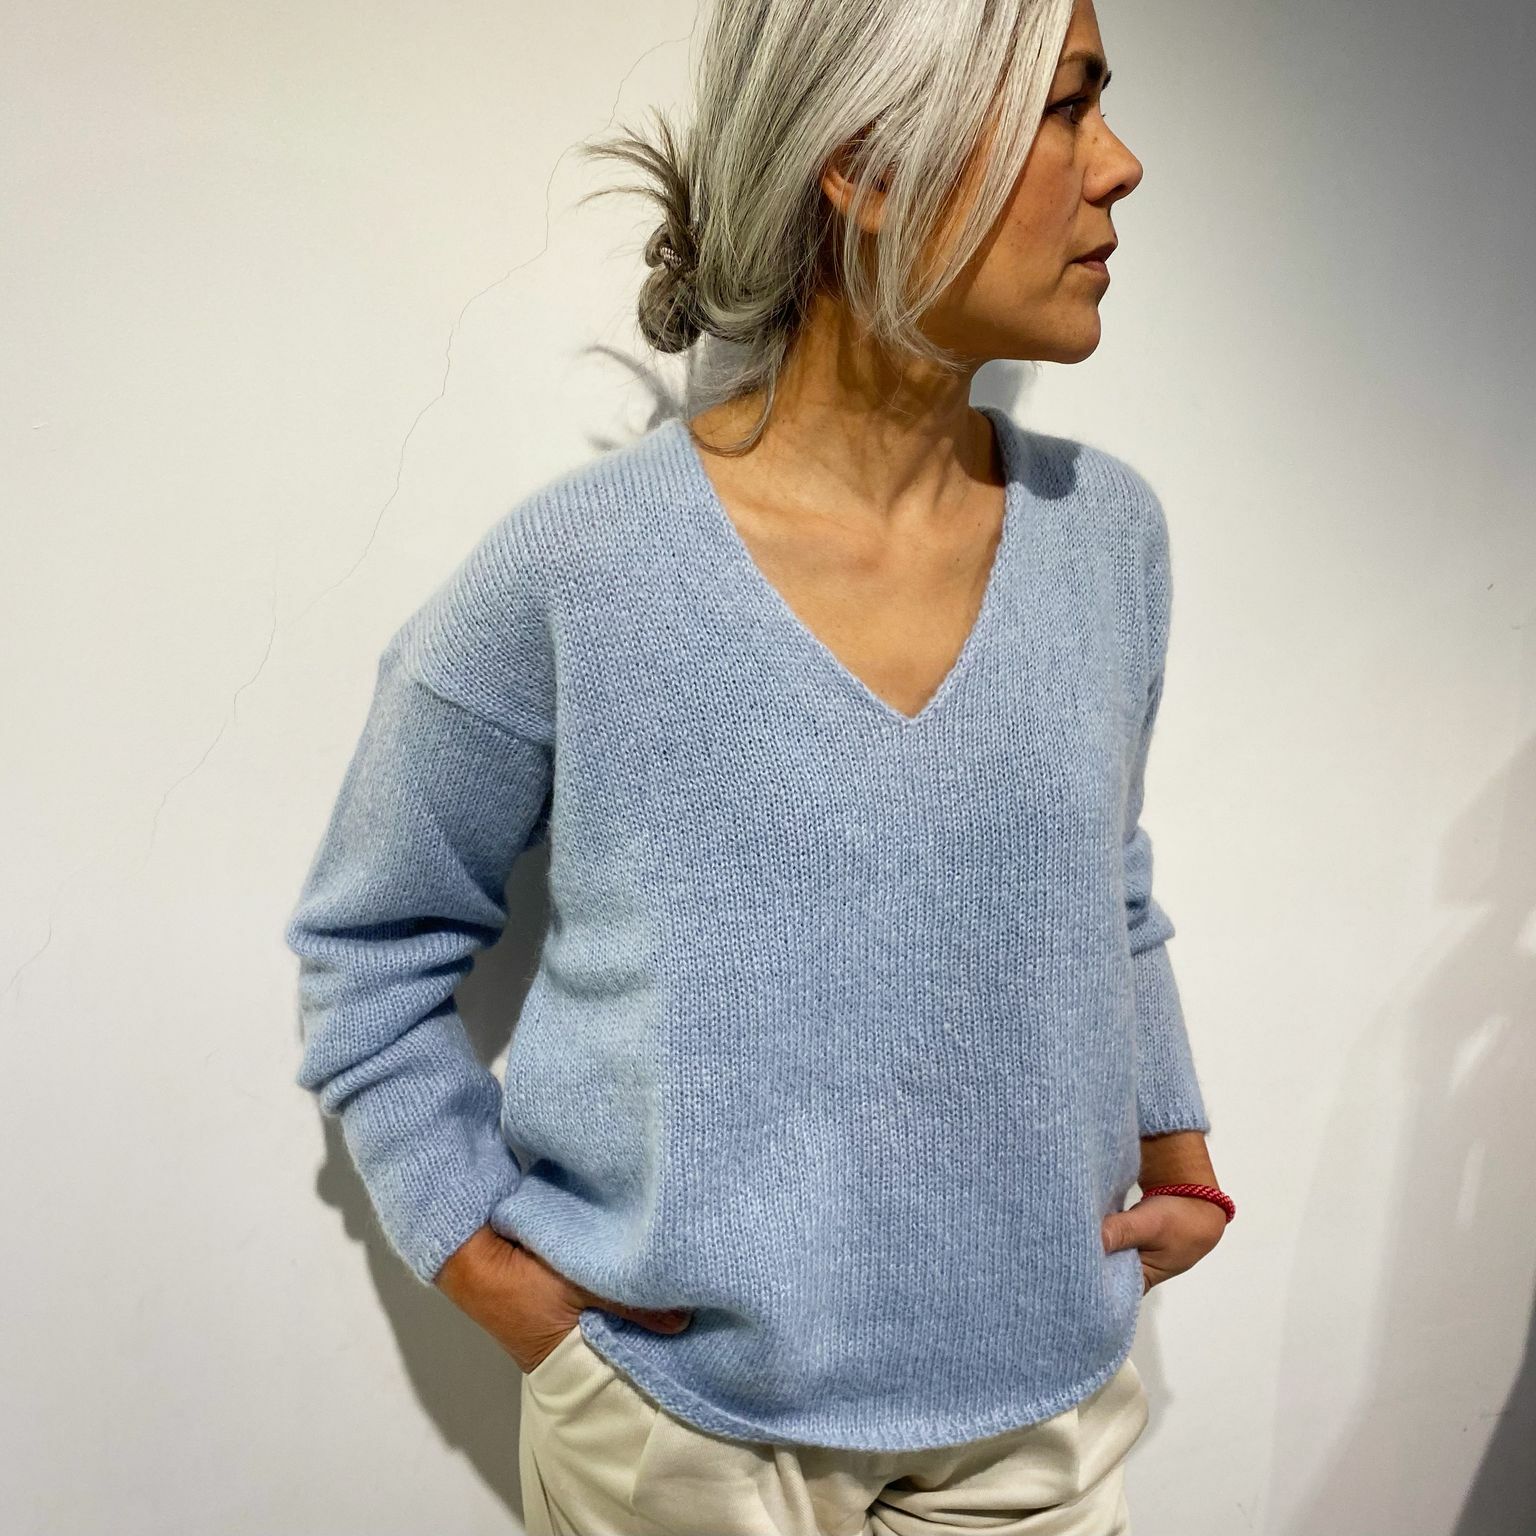 vallei Verwaarlozing Mijlpaal Sibin Linnebjerg dames trui Diana blauw online kopen bij No Sense.  DIANA-7408 | Where jeans meet fashion